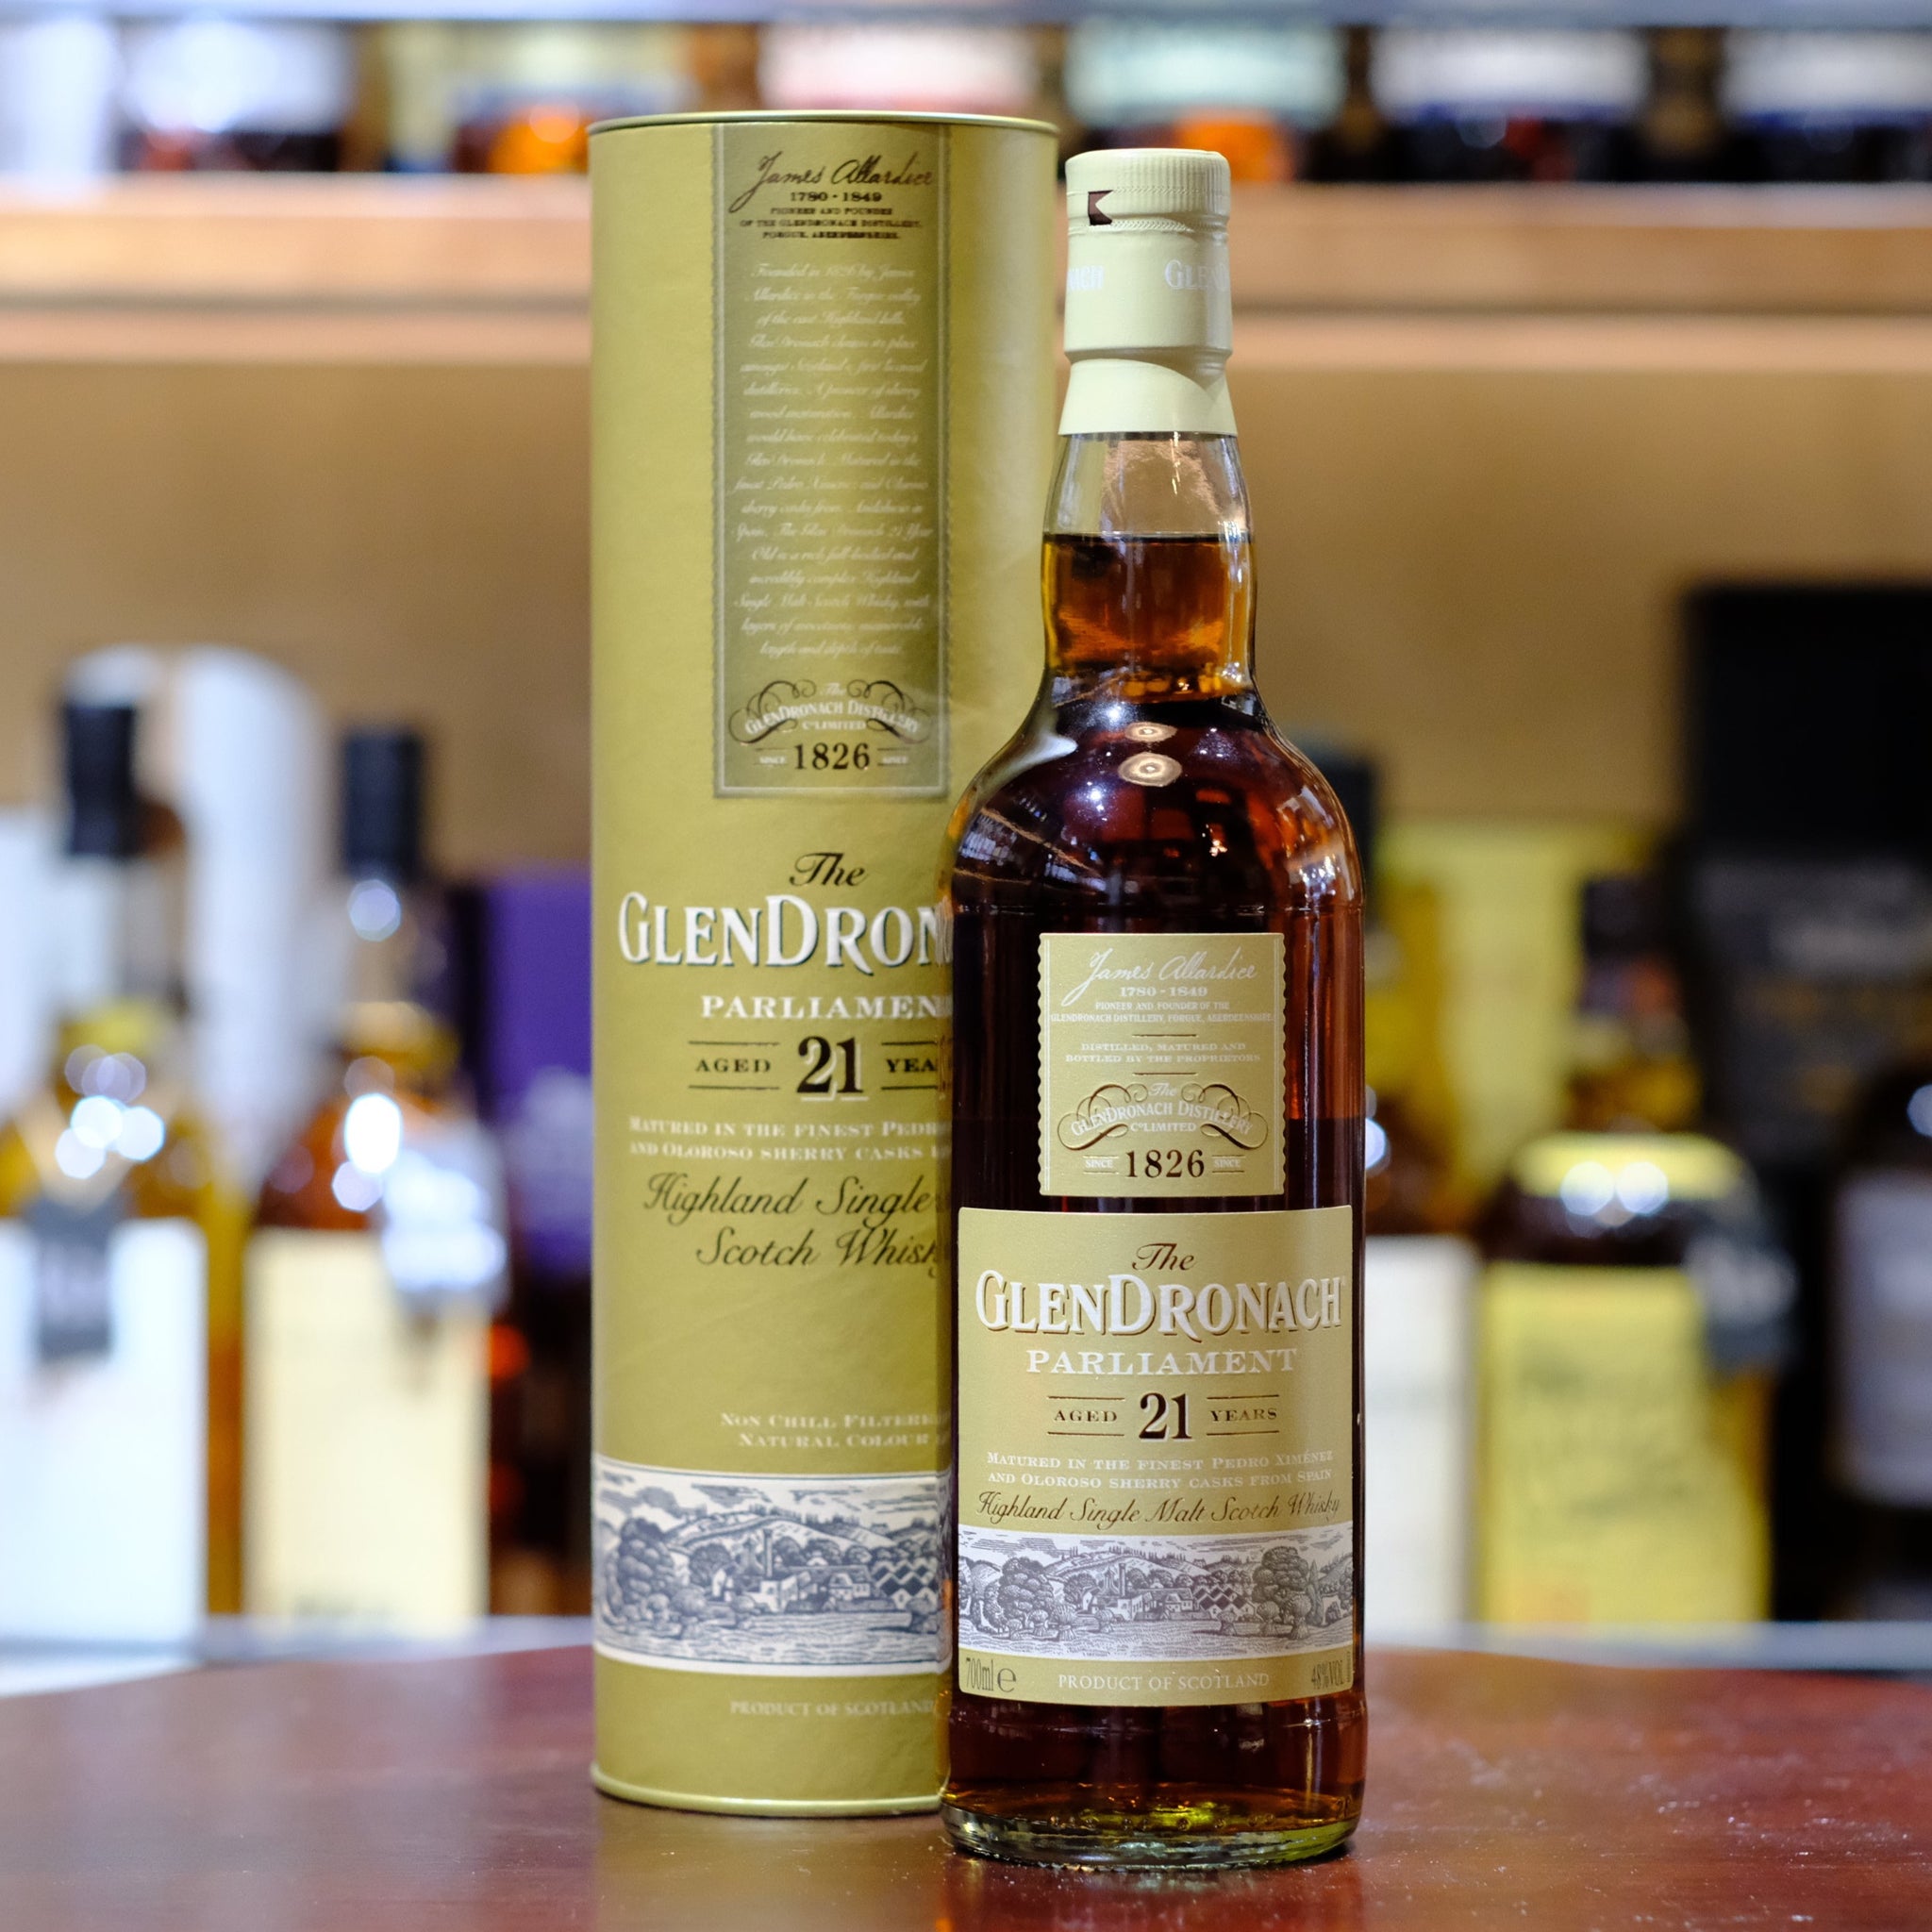 Glendronach 21 Year Old "Parliament" Single Malt Scotch Whisky (2021)